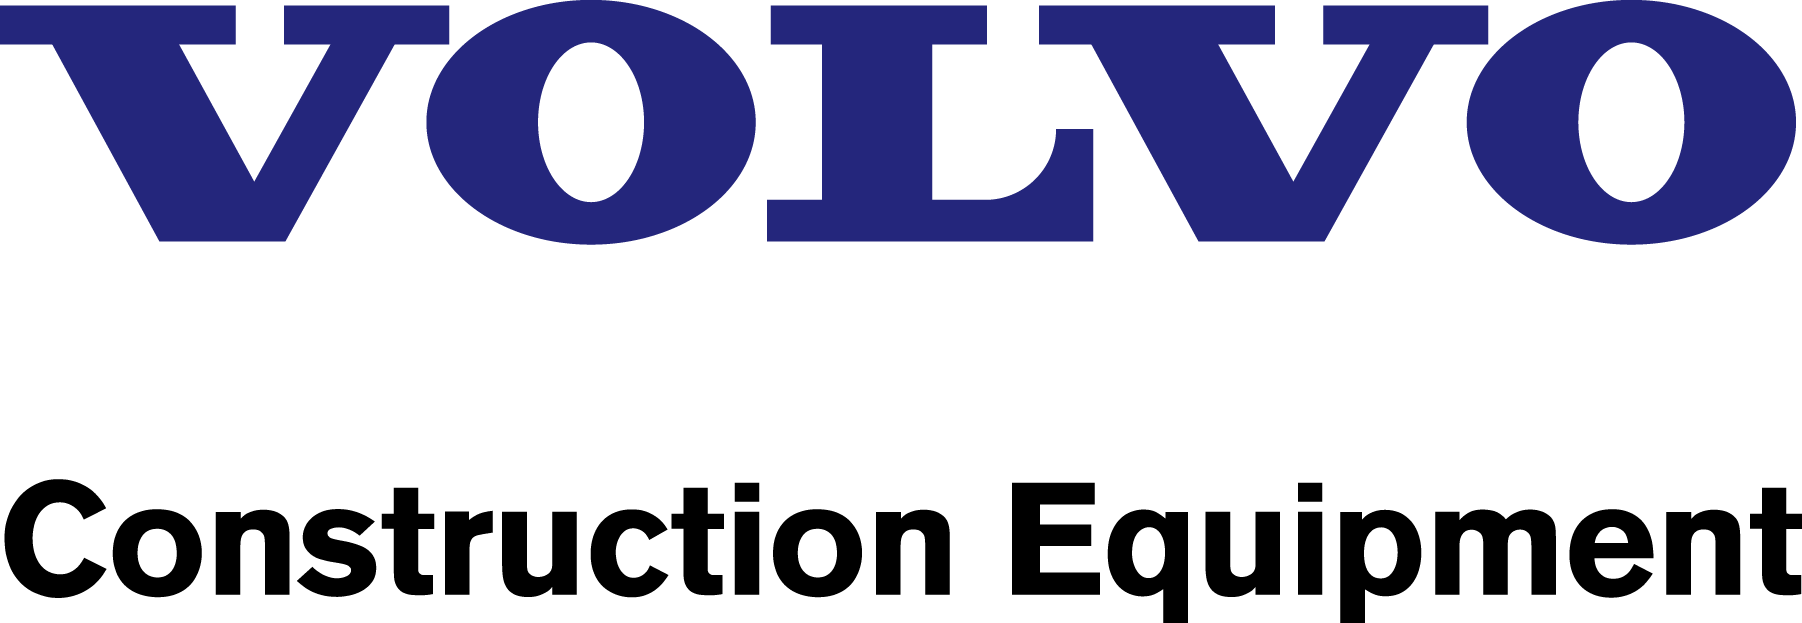 Volvo-Construction-Equipment-logo